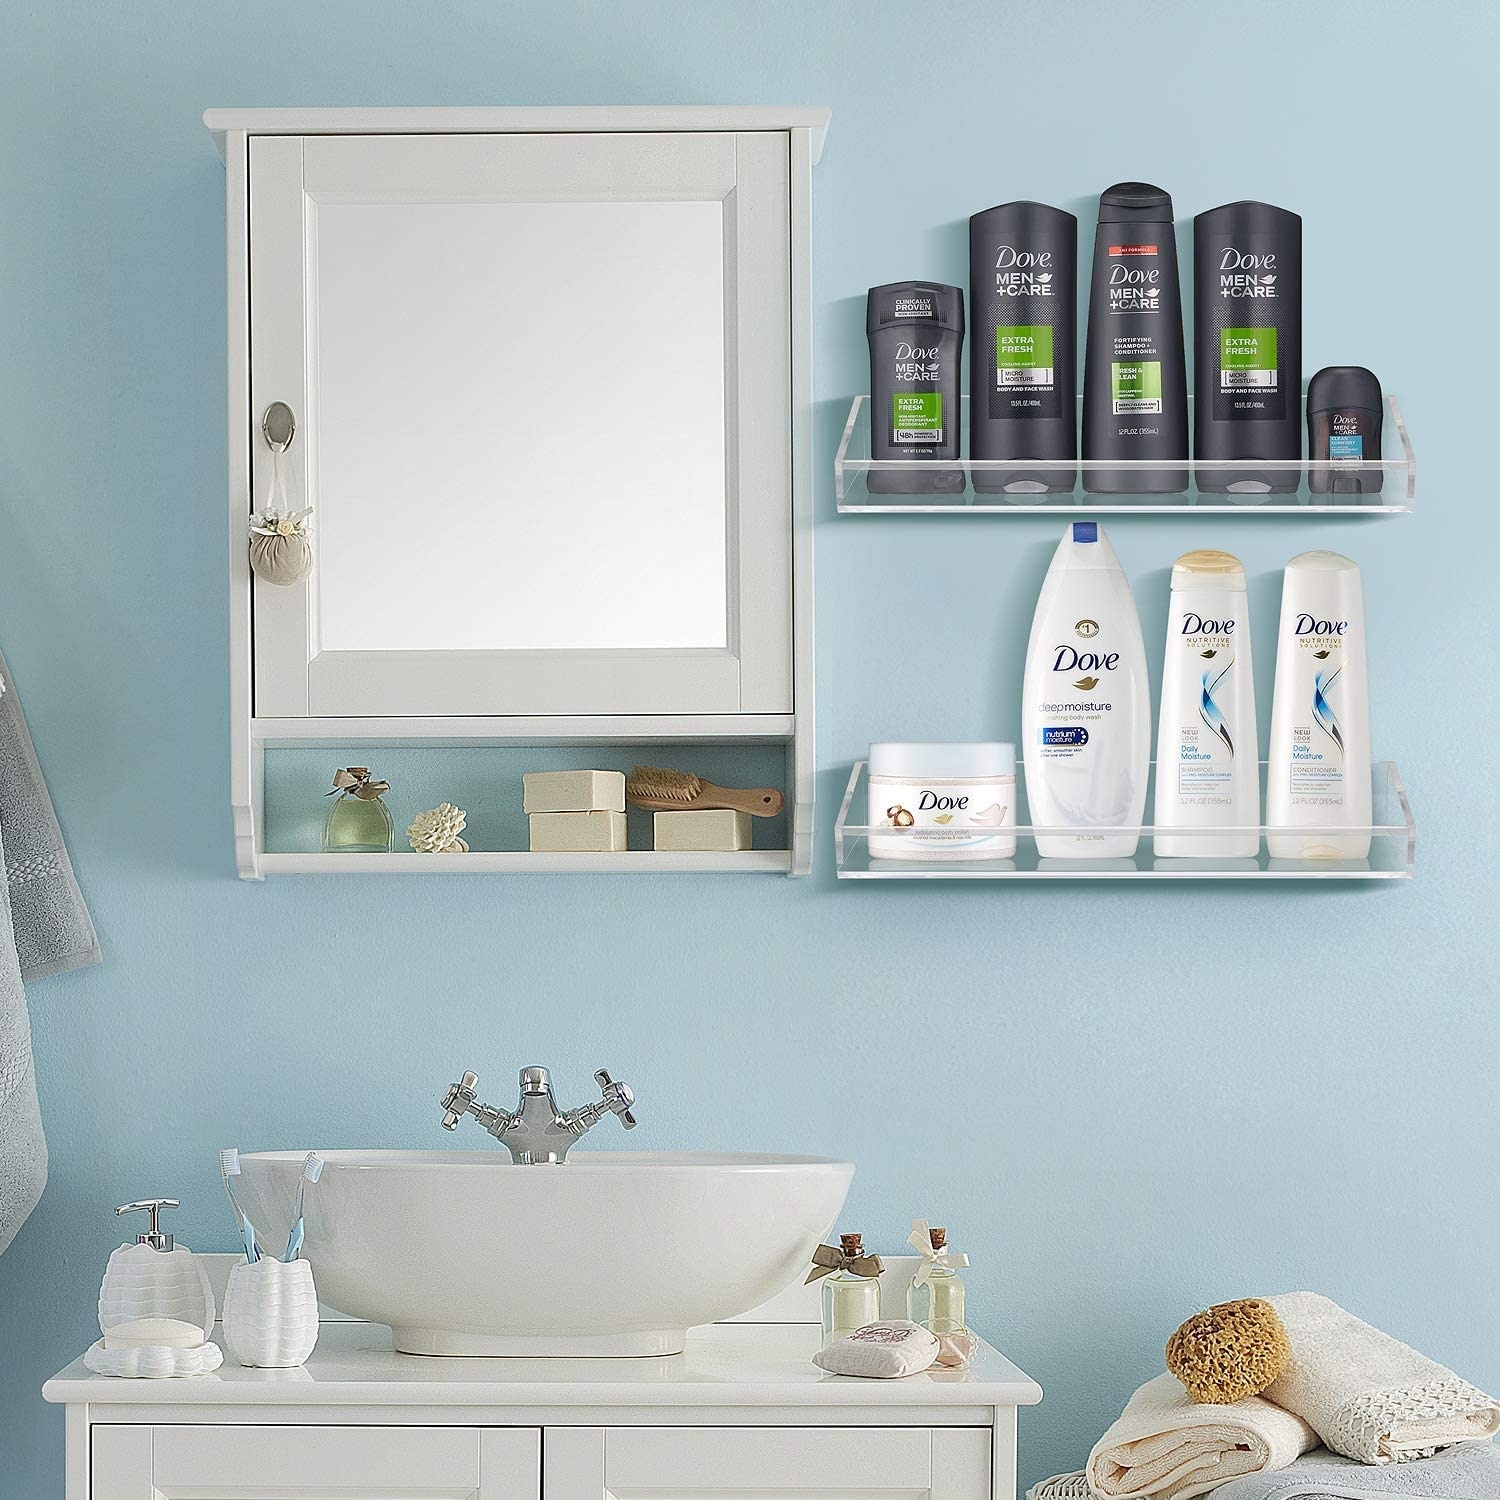 https://ak1.ostkcdn.com/images/products/is/images/direct/ded93f49c0b3cda10f2a910455407cac9ee4e9b0/Acrylic-Bathroom-Floating-Display-Shelves%2C-Clear-Shelf-Storage.jpg